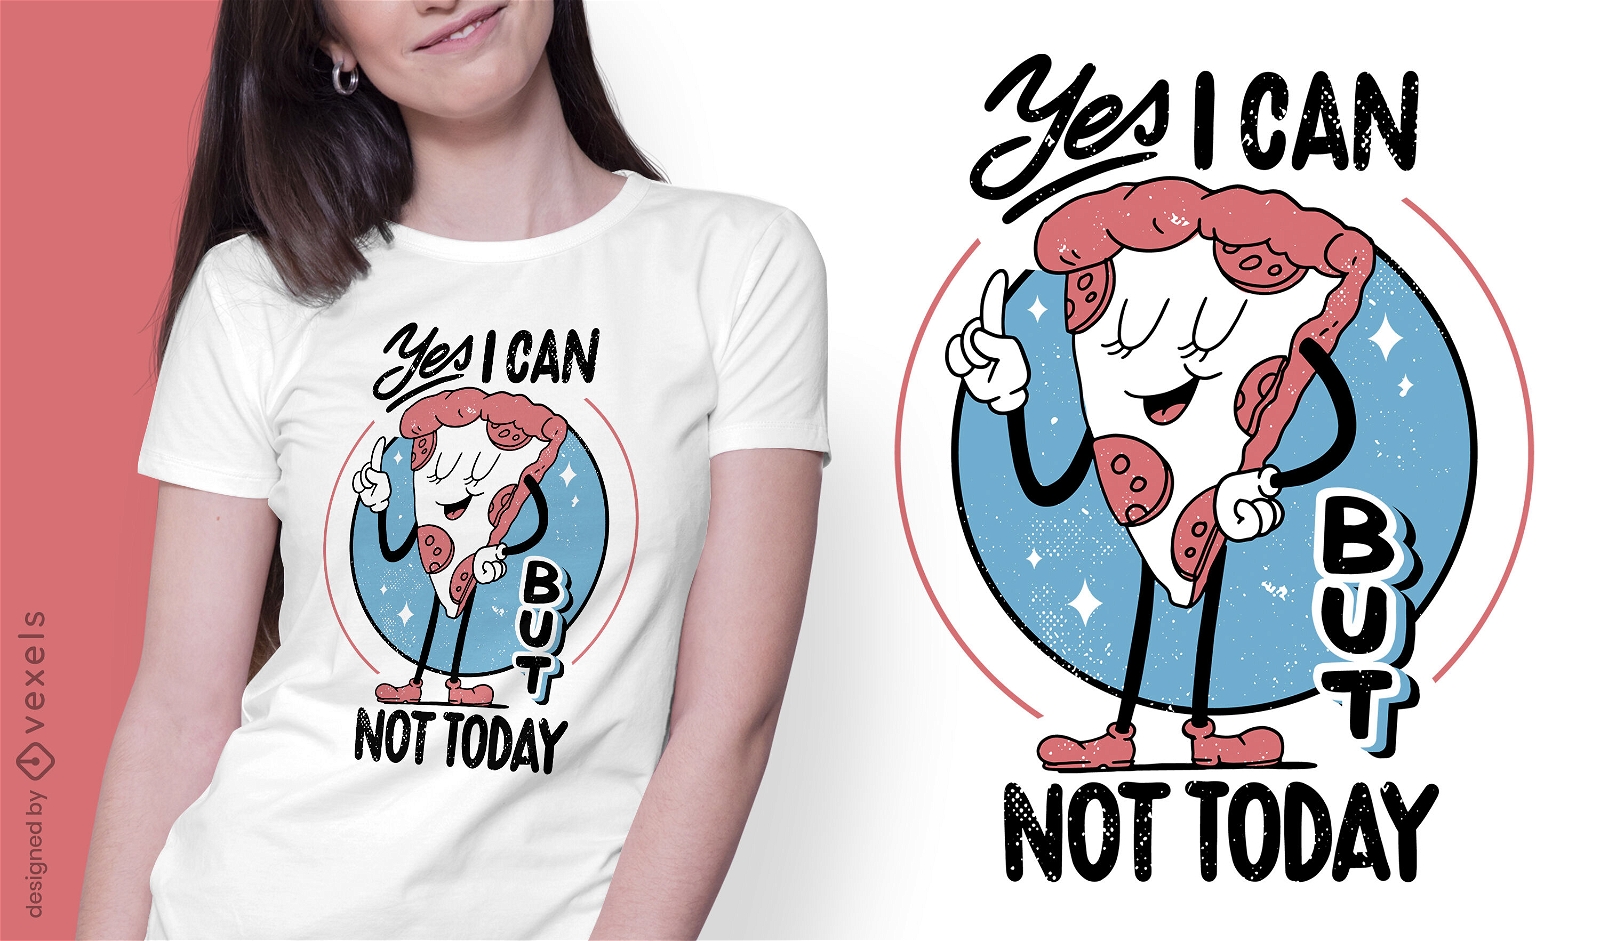 Funny antisocial pizza slice t-shirt design